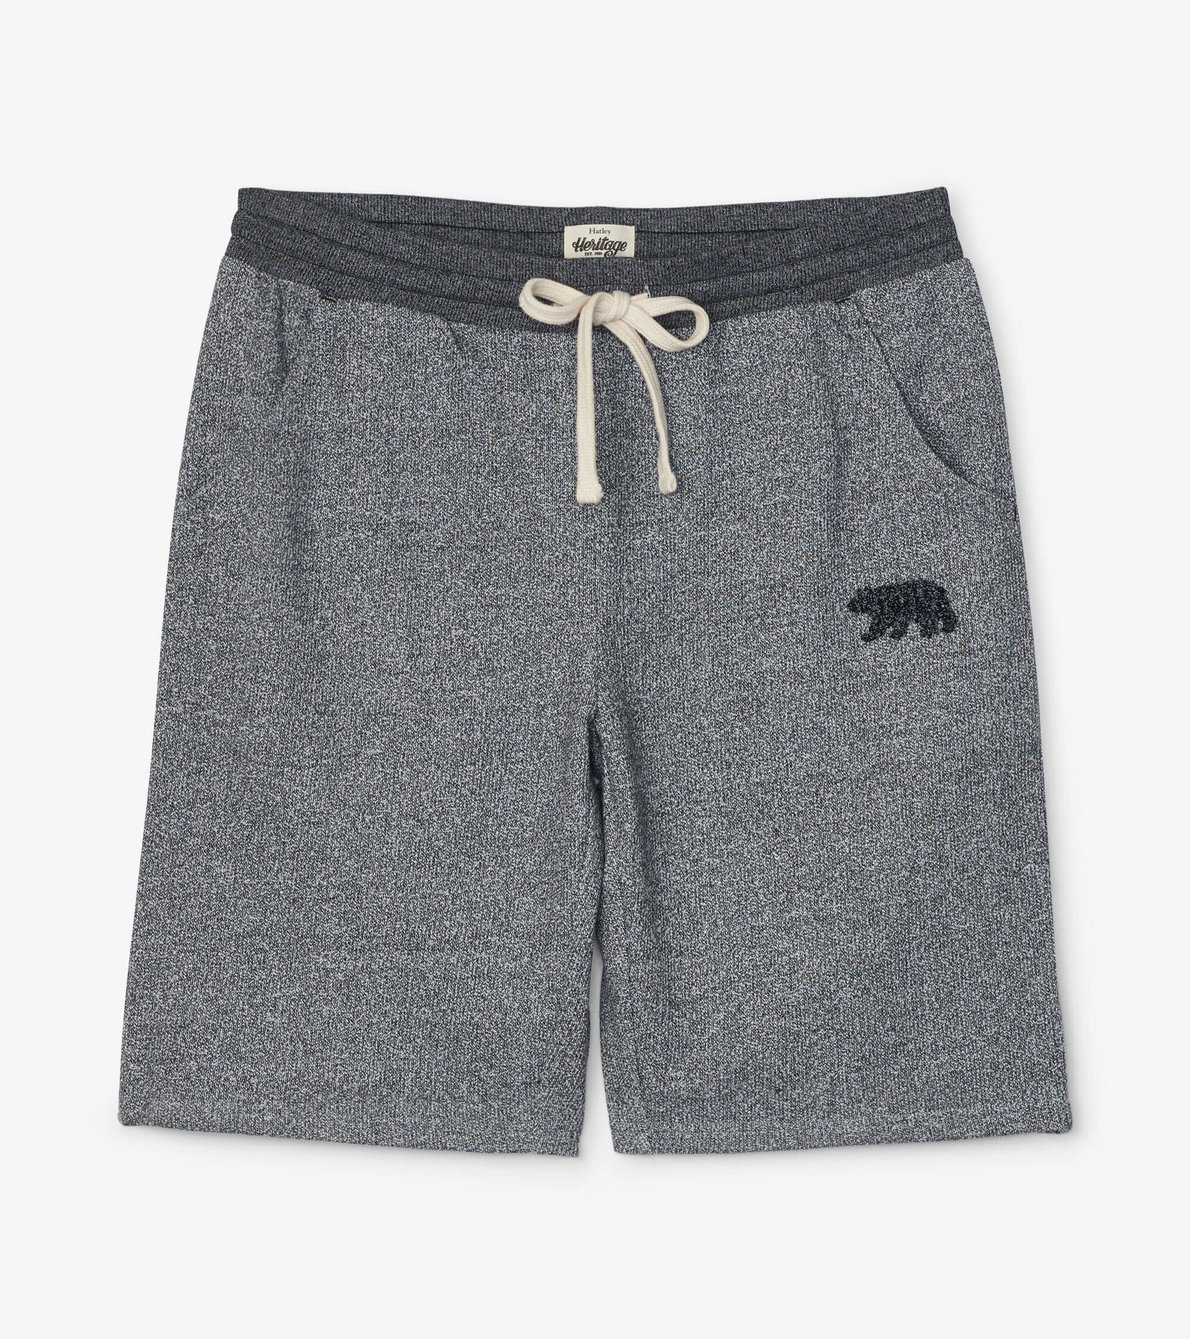 View larger image of Marled Grey Bear Men's Heritage Shorts